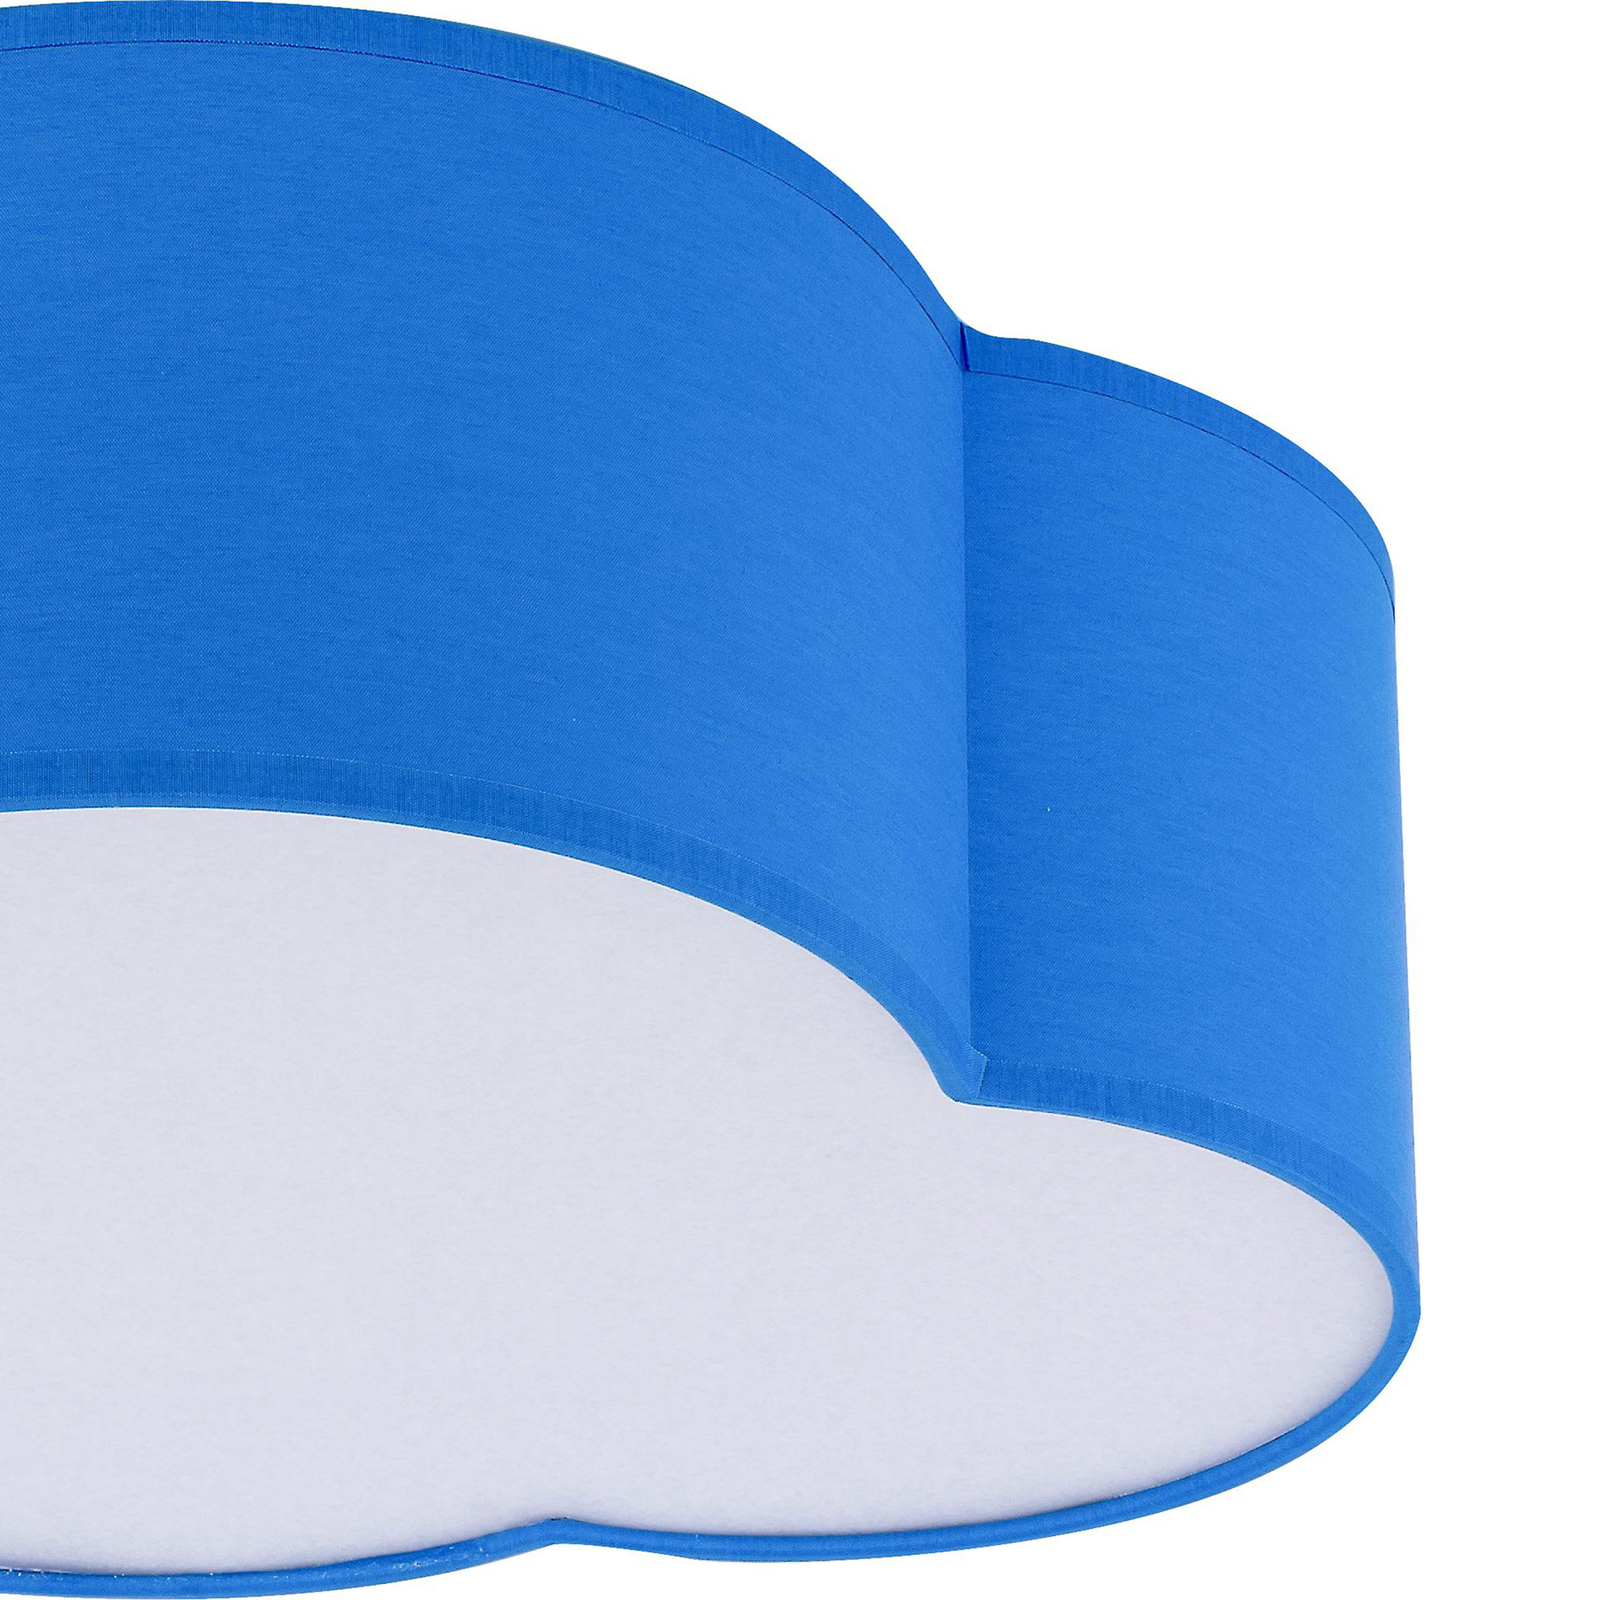 Lubinis šviestuvas "Cloud", tekstilė, 41 x 31 cm, mėlyna